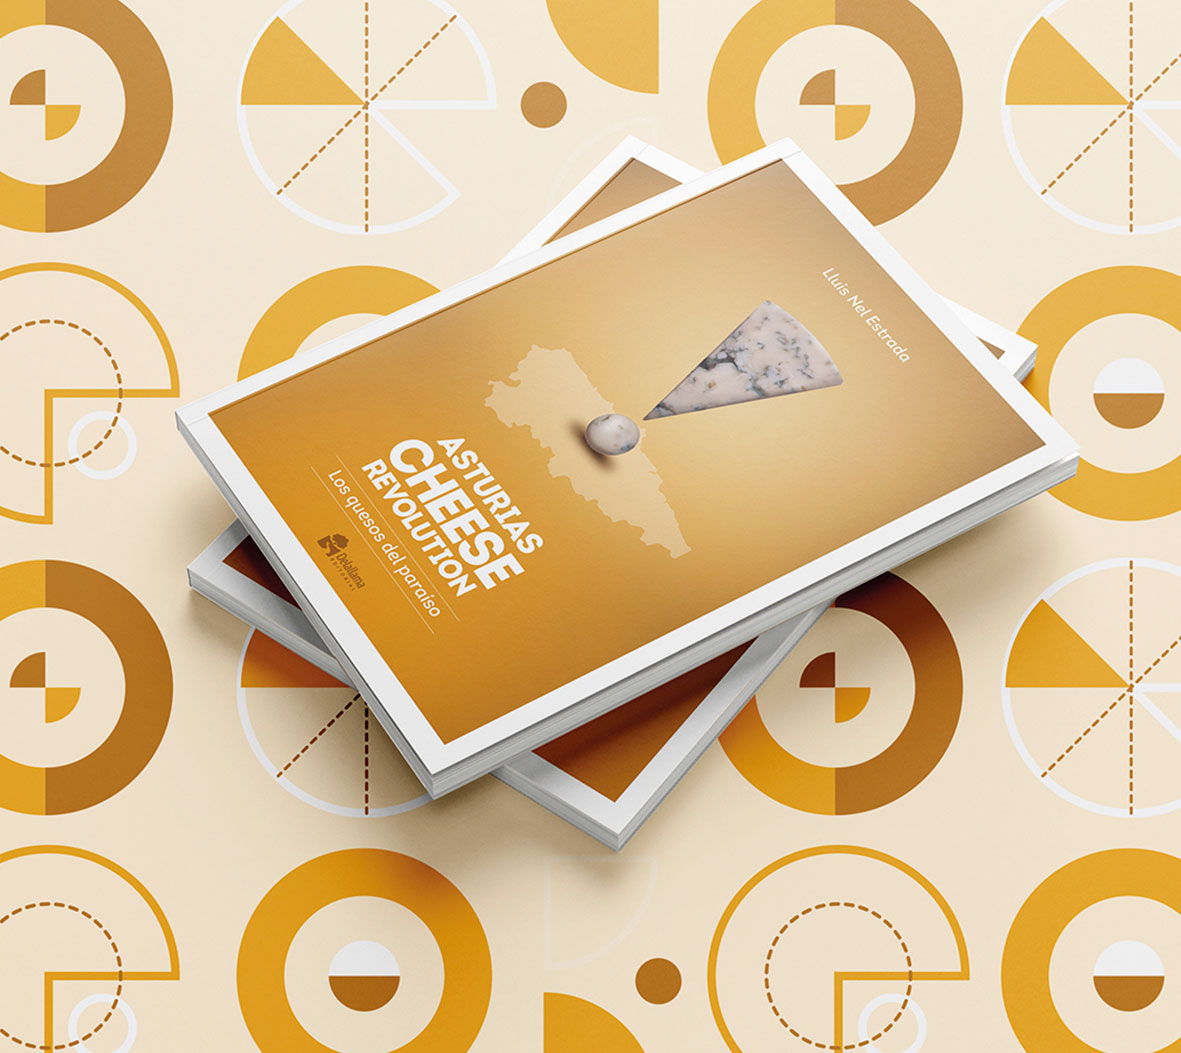 Asturias Cheese Revolution book design